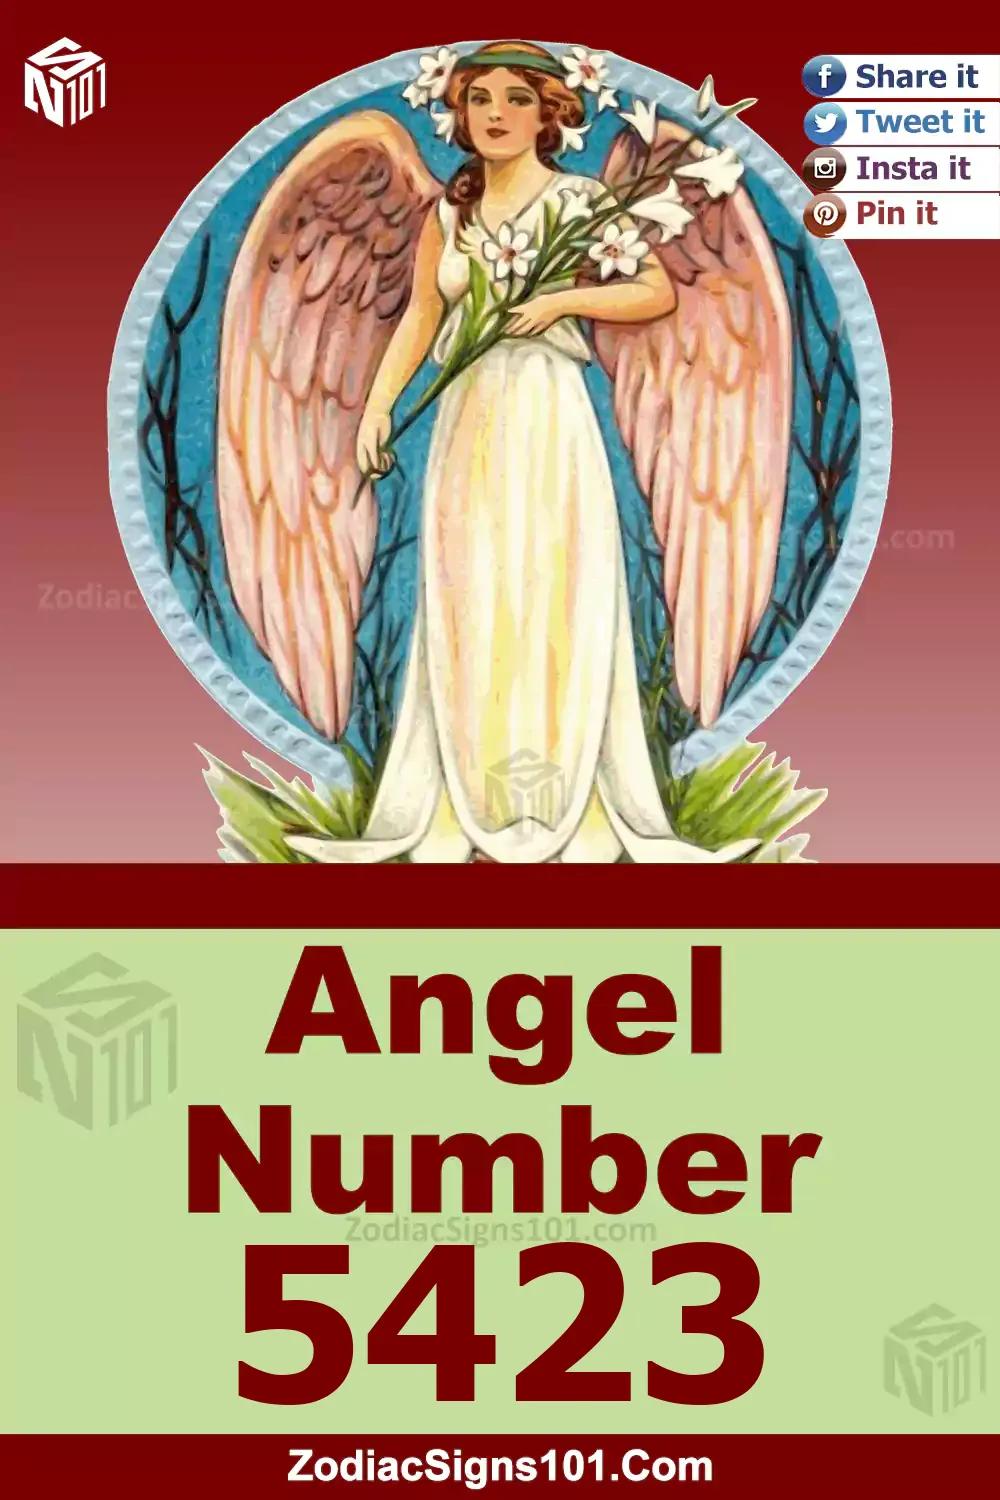 5423-Angel-Number-Meaning.jpg